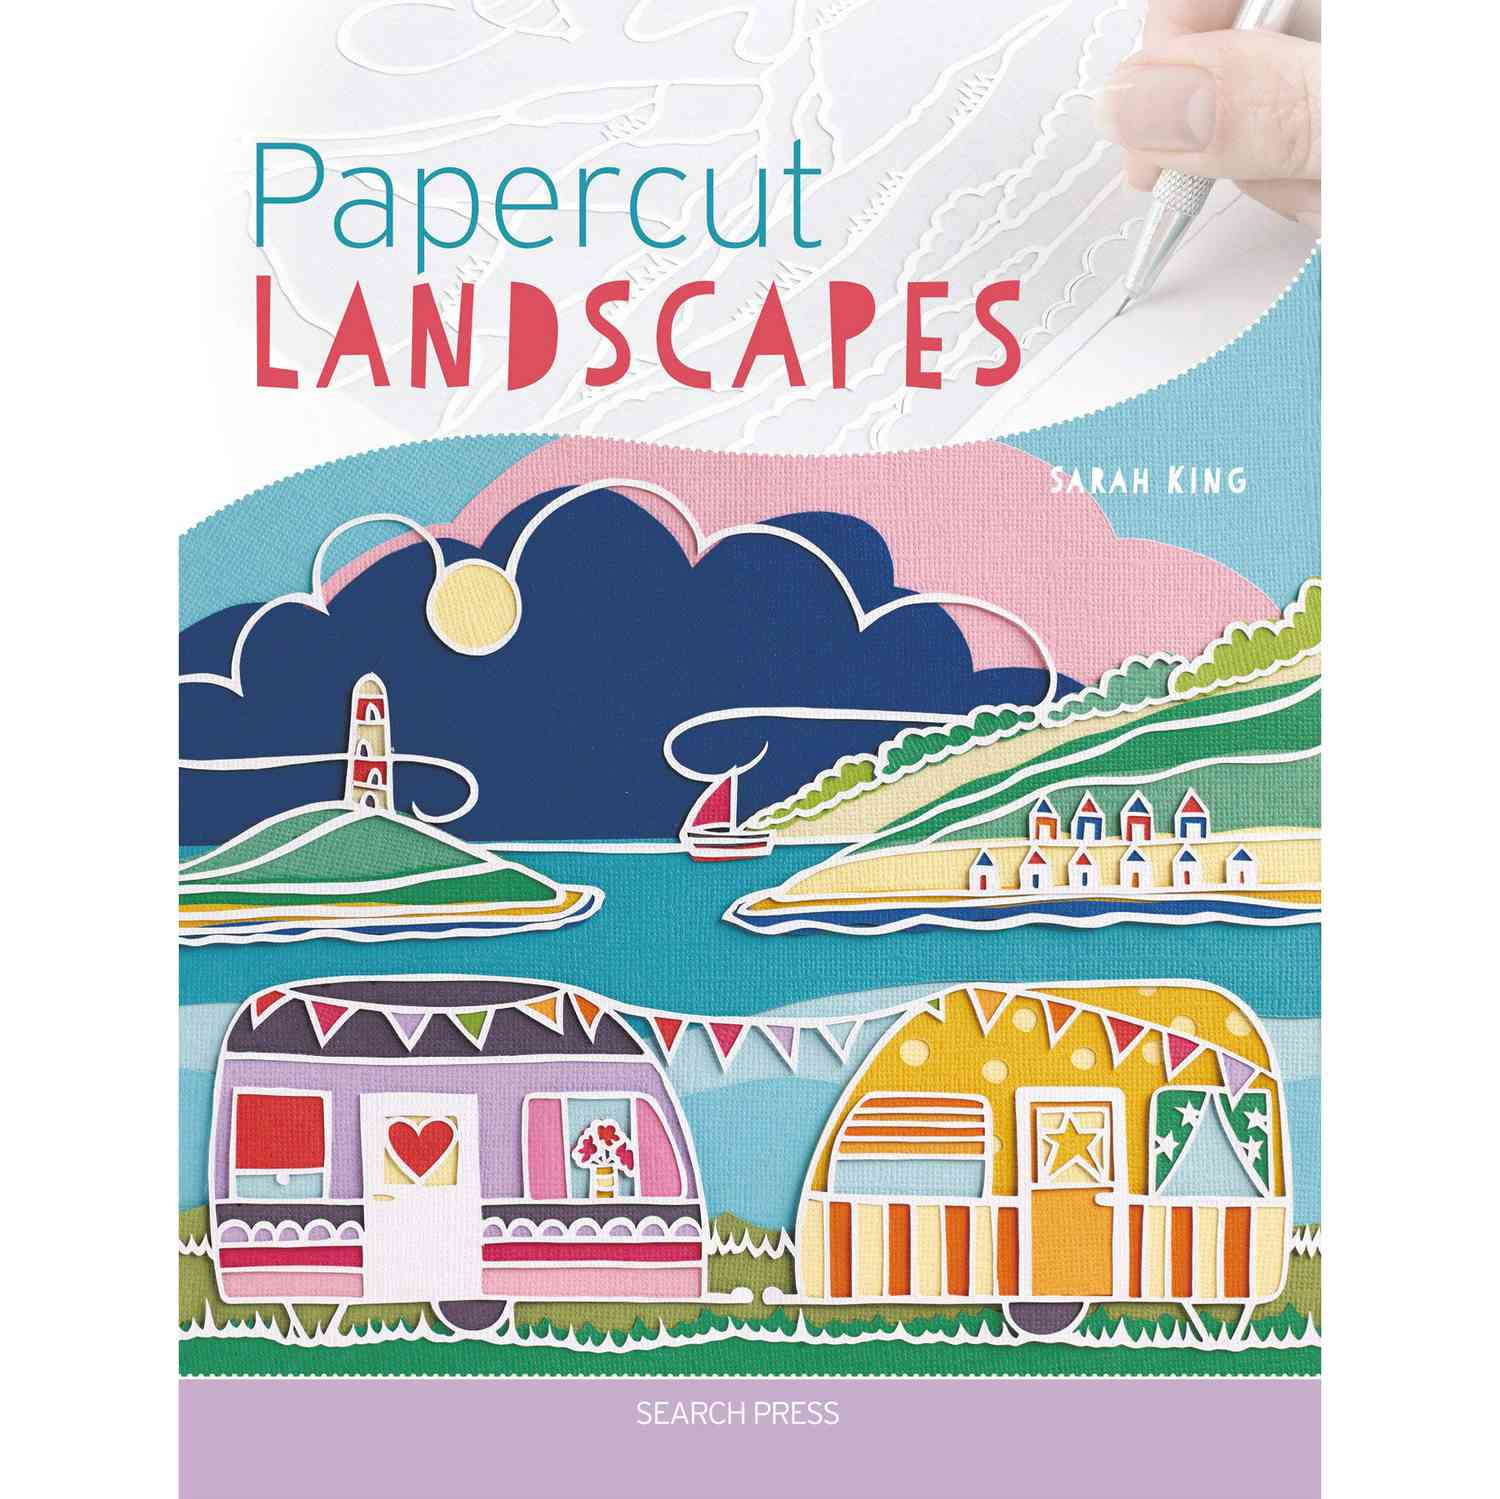 papercut landscapes book cover